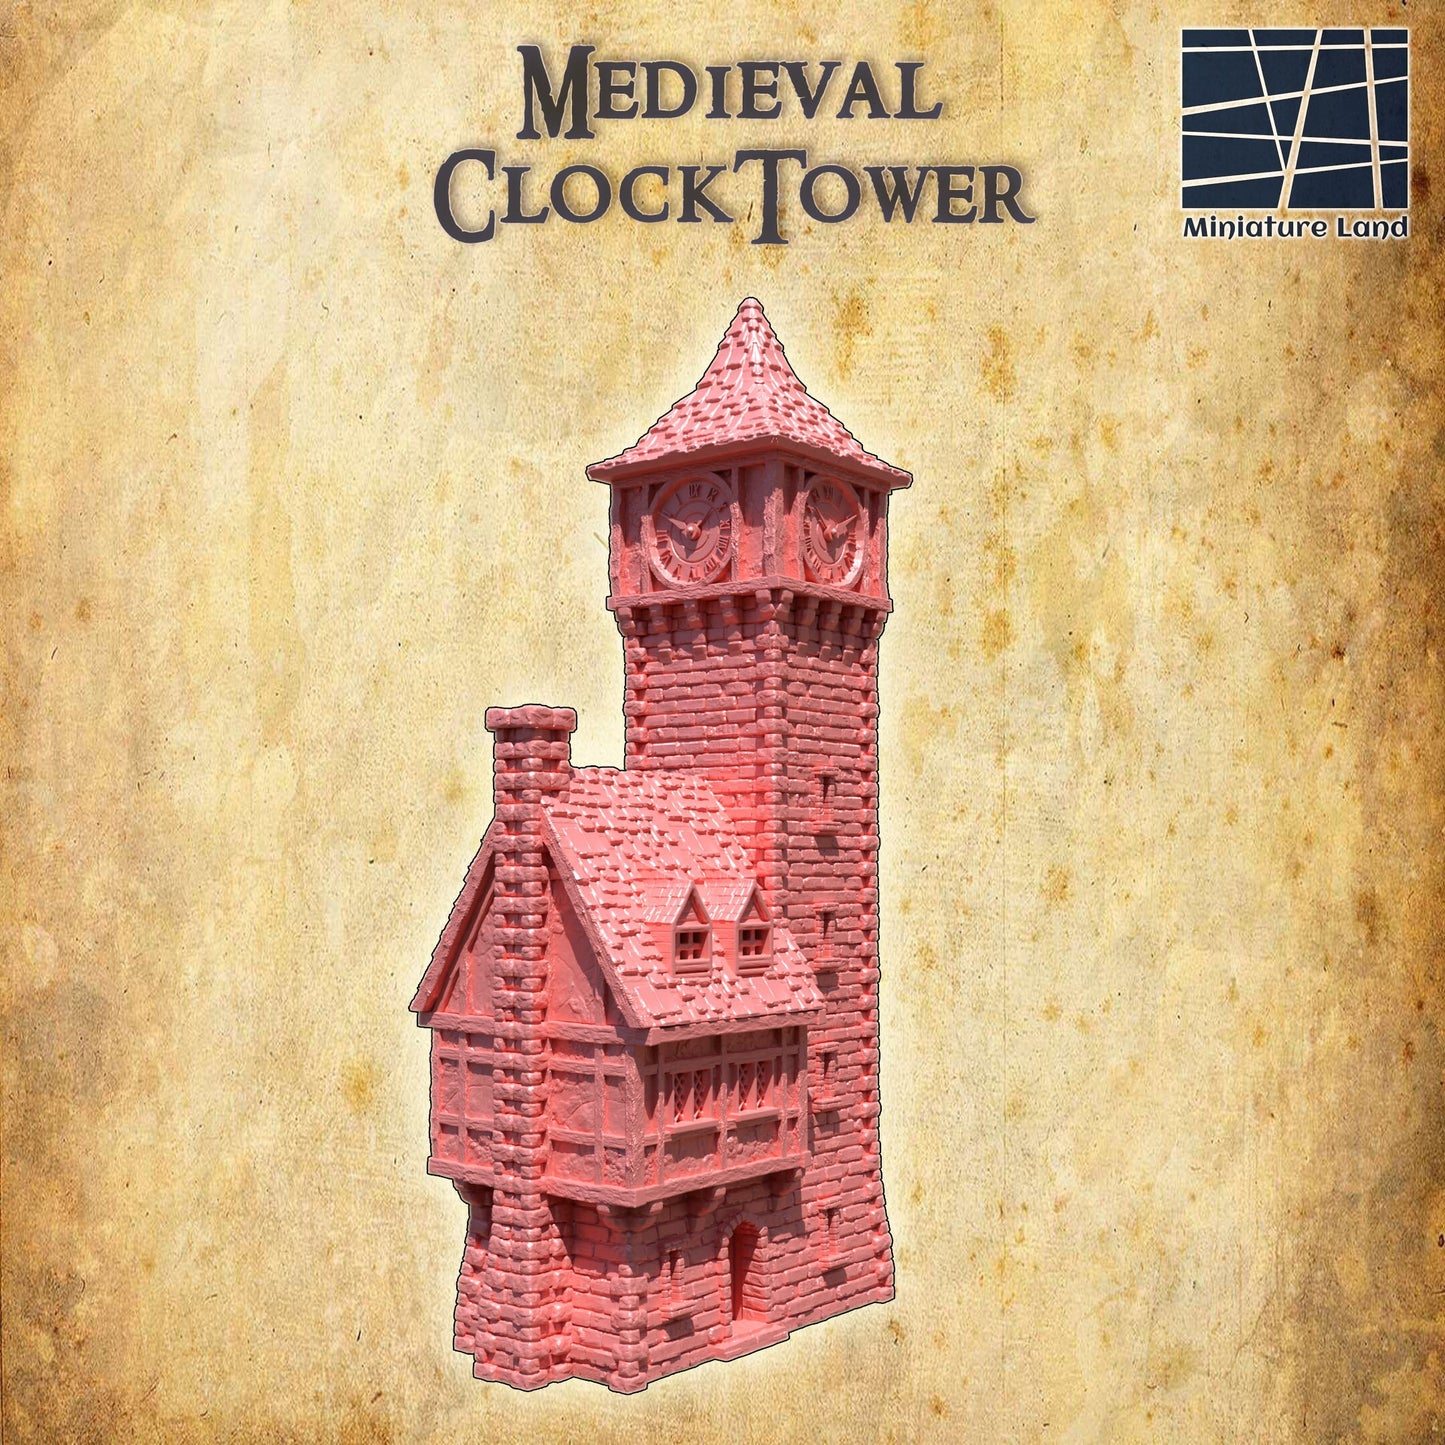 Medieval Clocktower, Clocktower